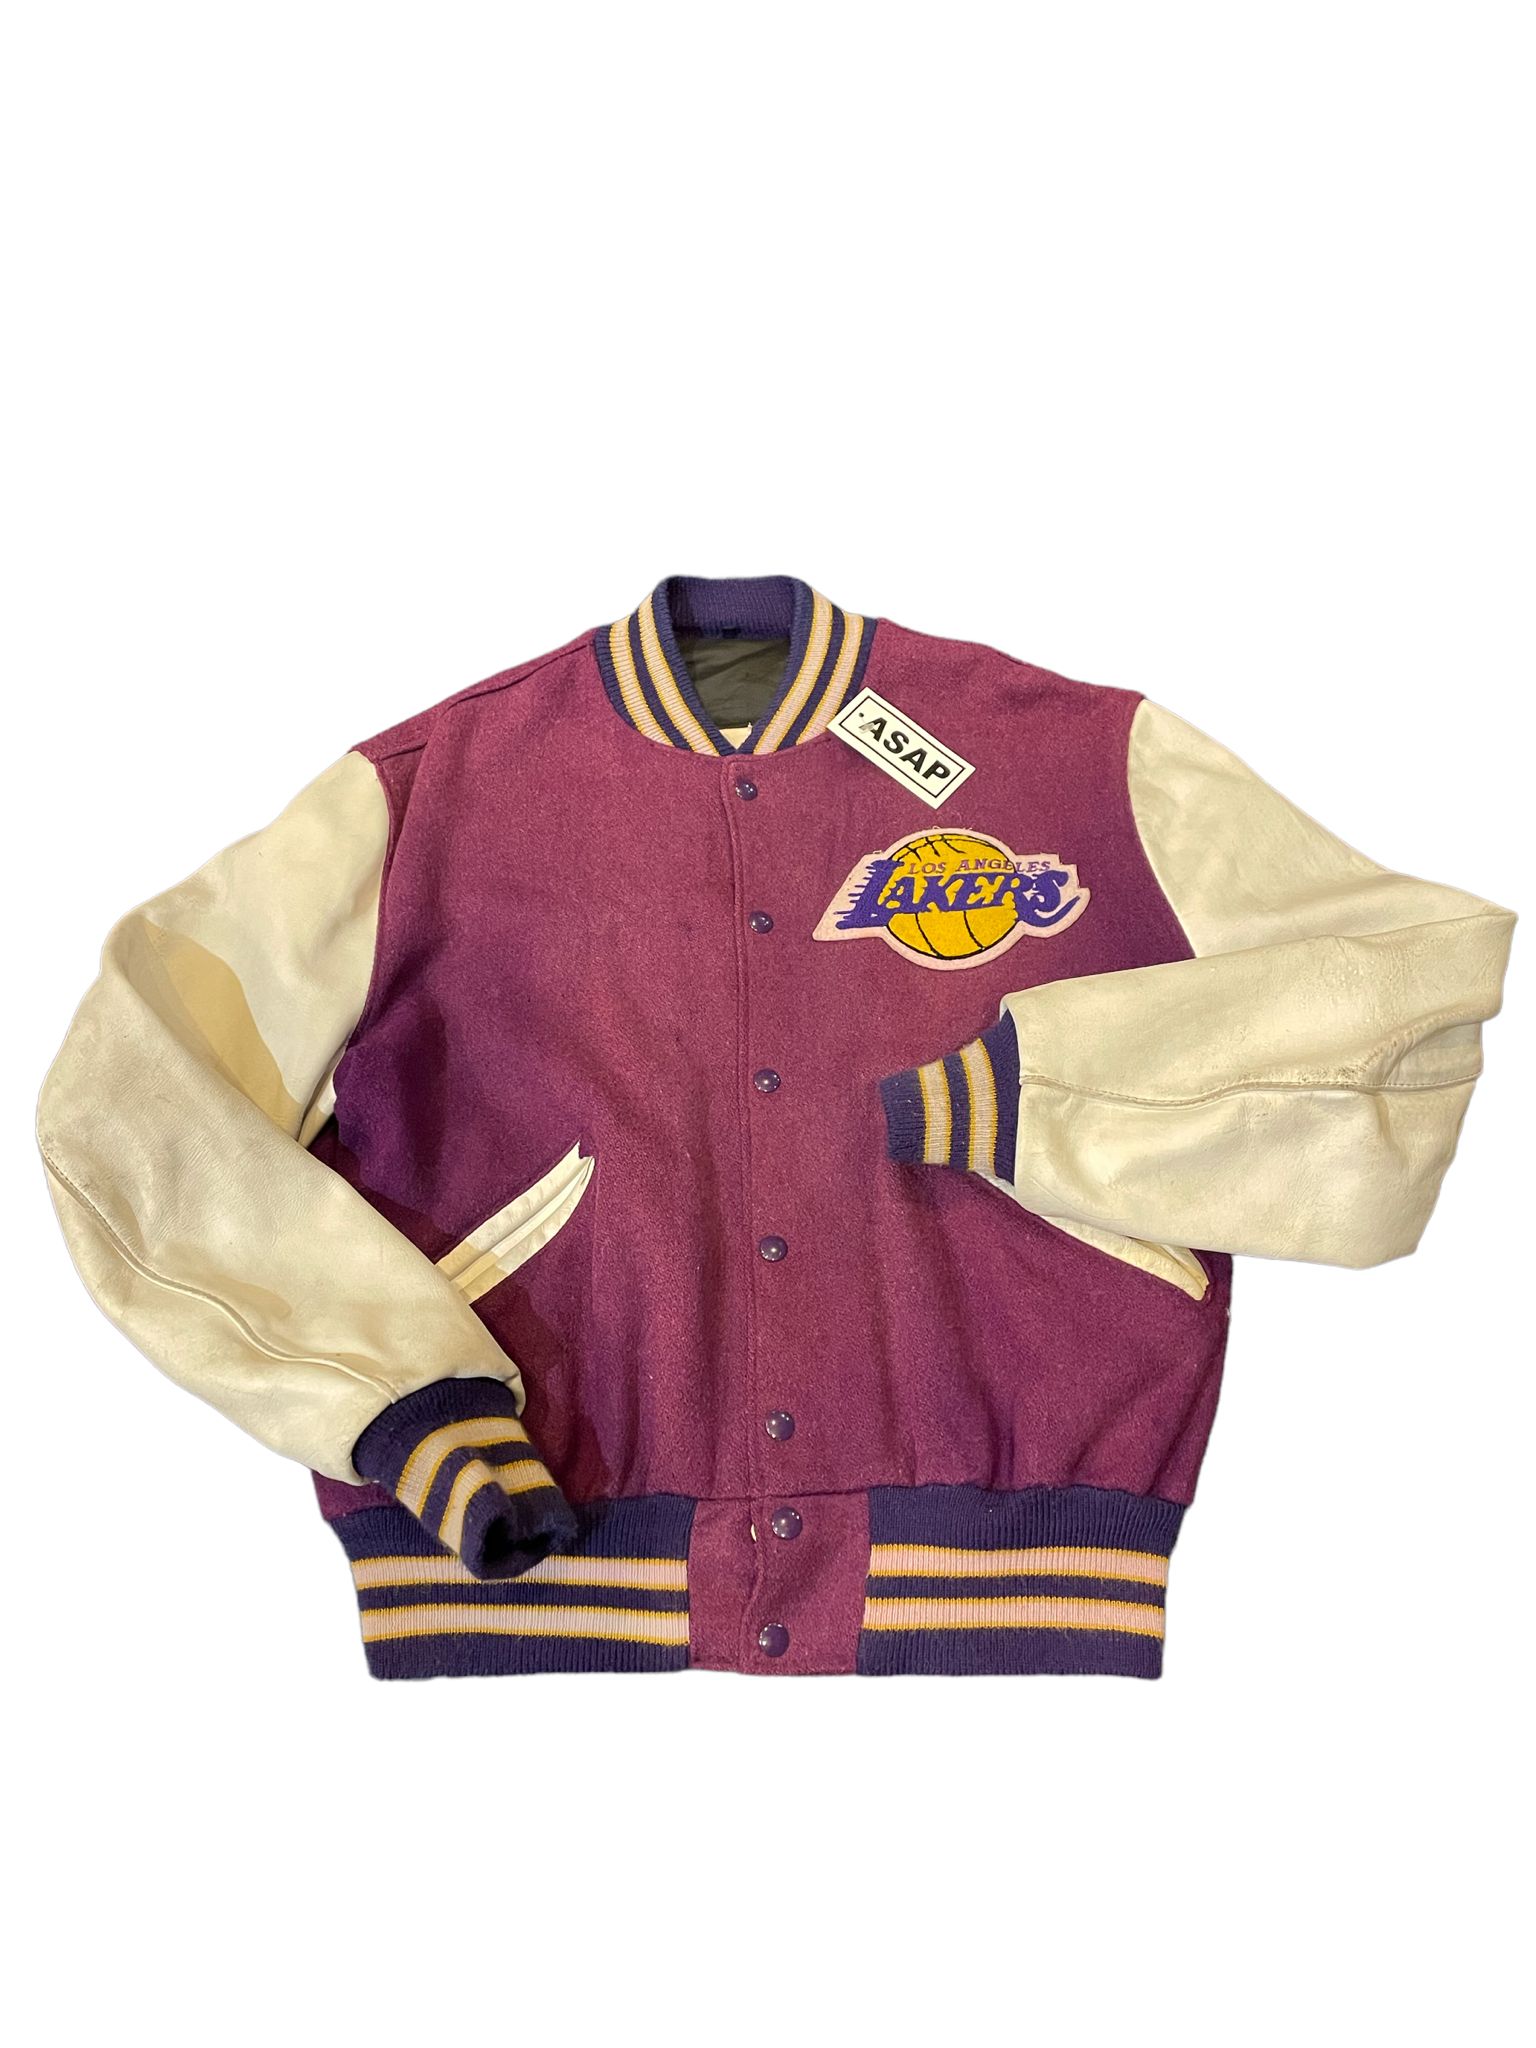 vintage lakers letterman jacket